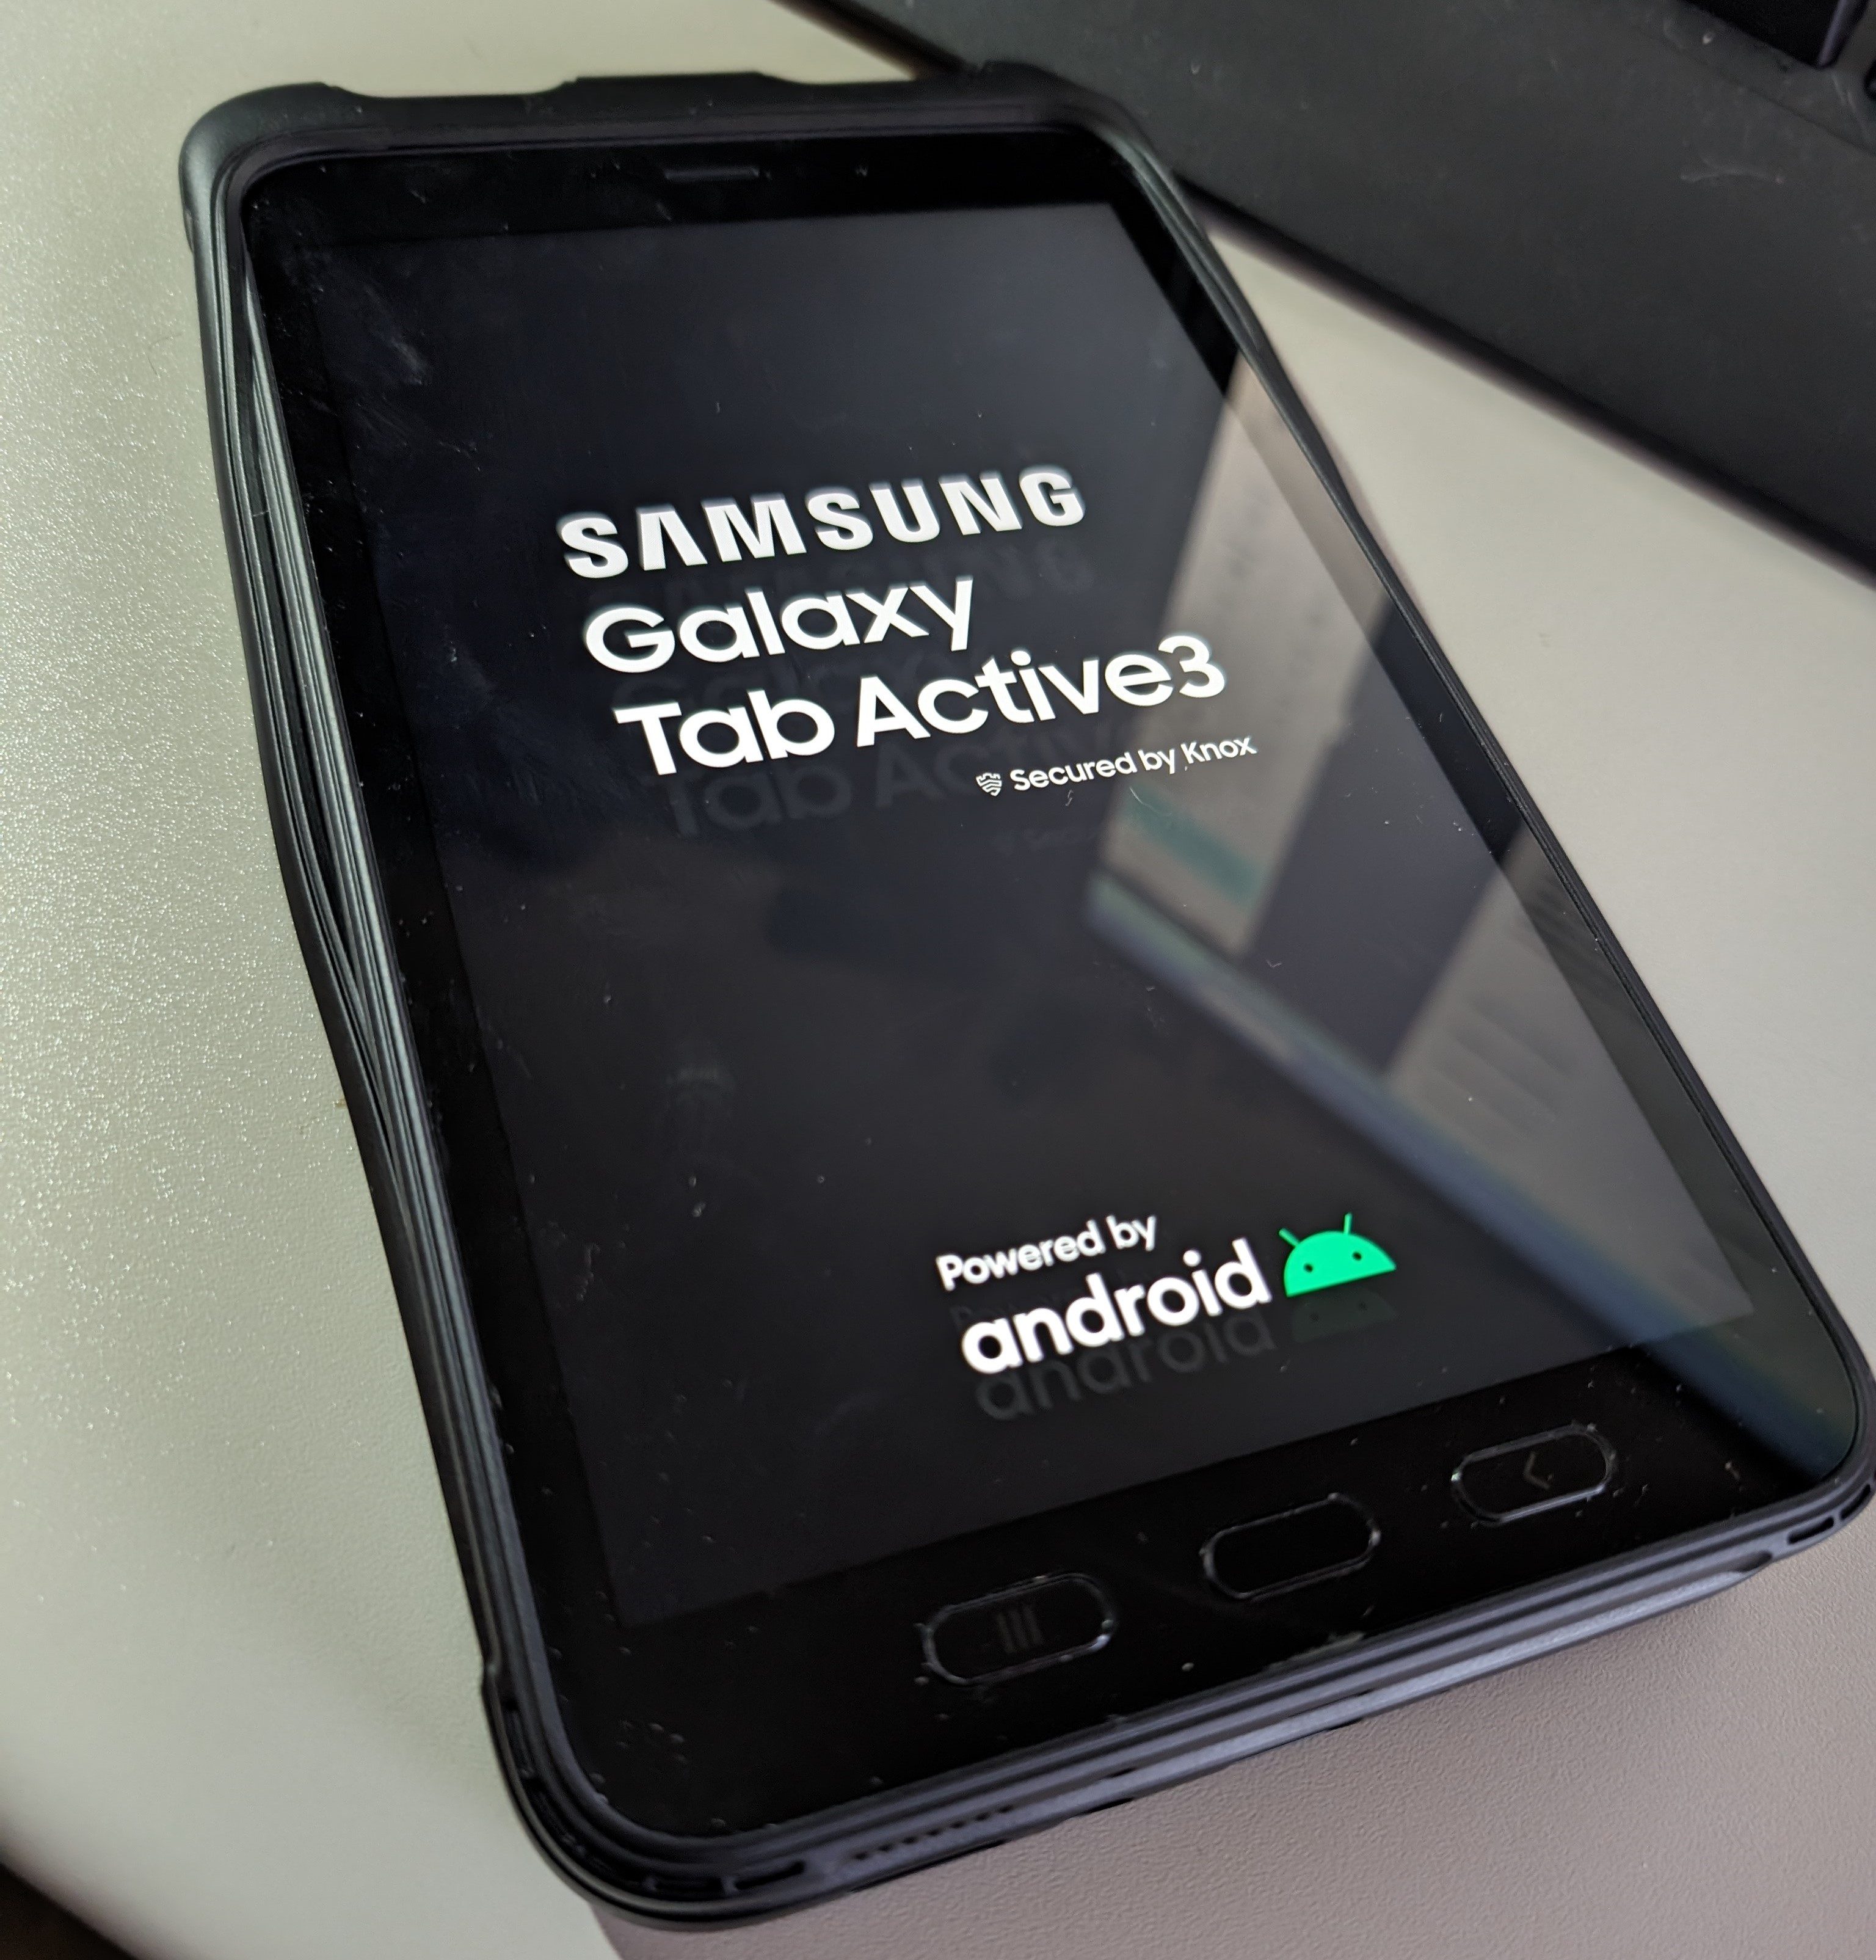 Samsung Galaxy Tab Active3 